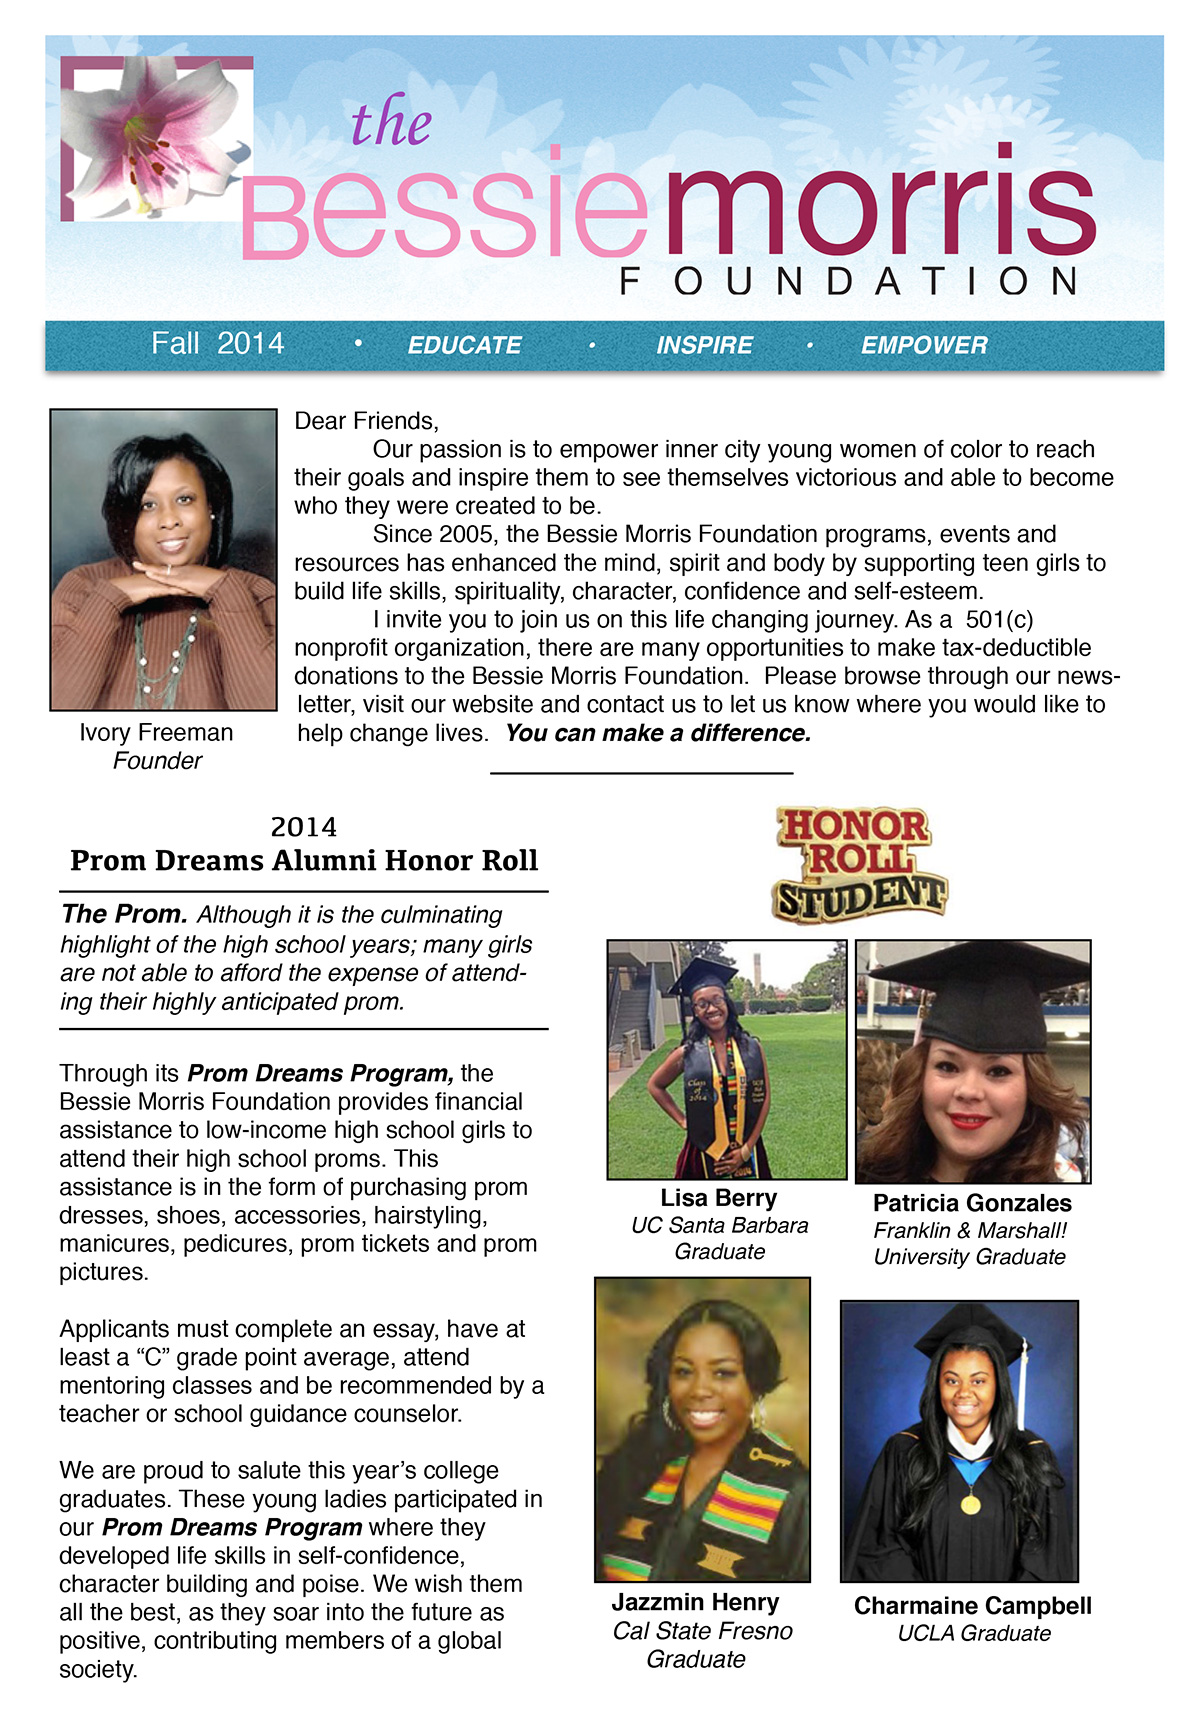 Bessie Morris Foundation newsletter Fall 2014 edition